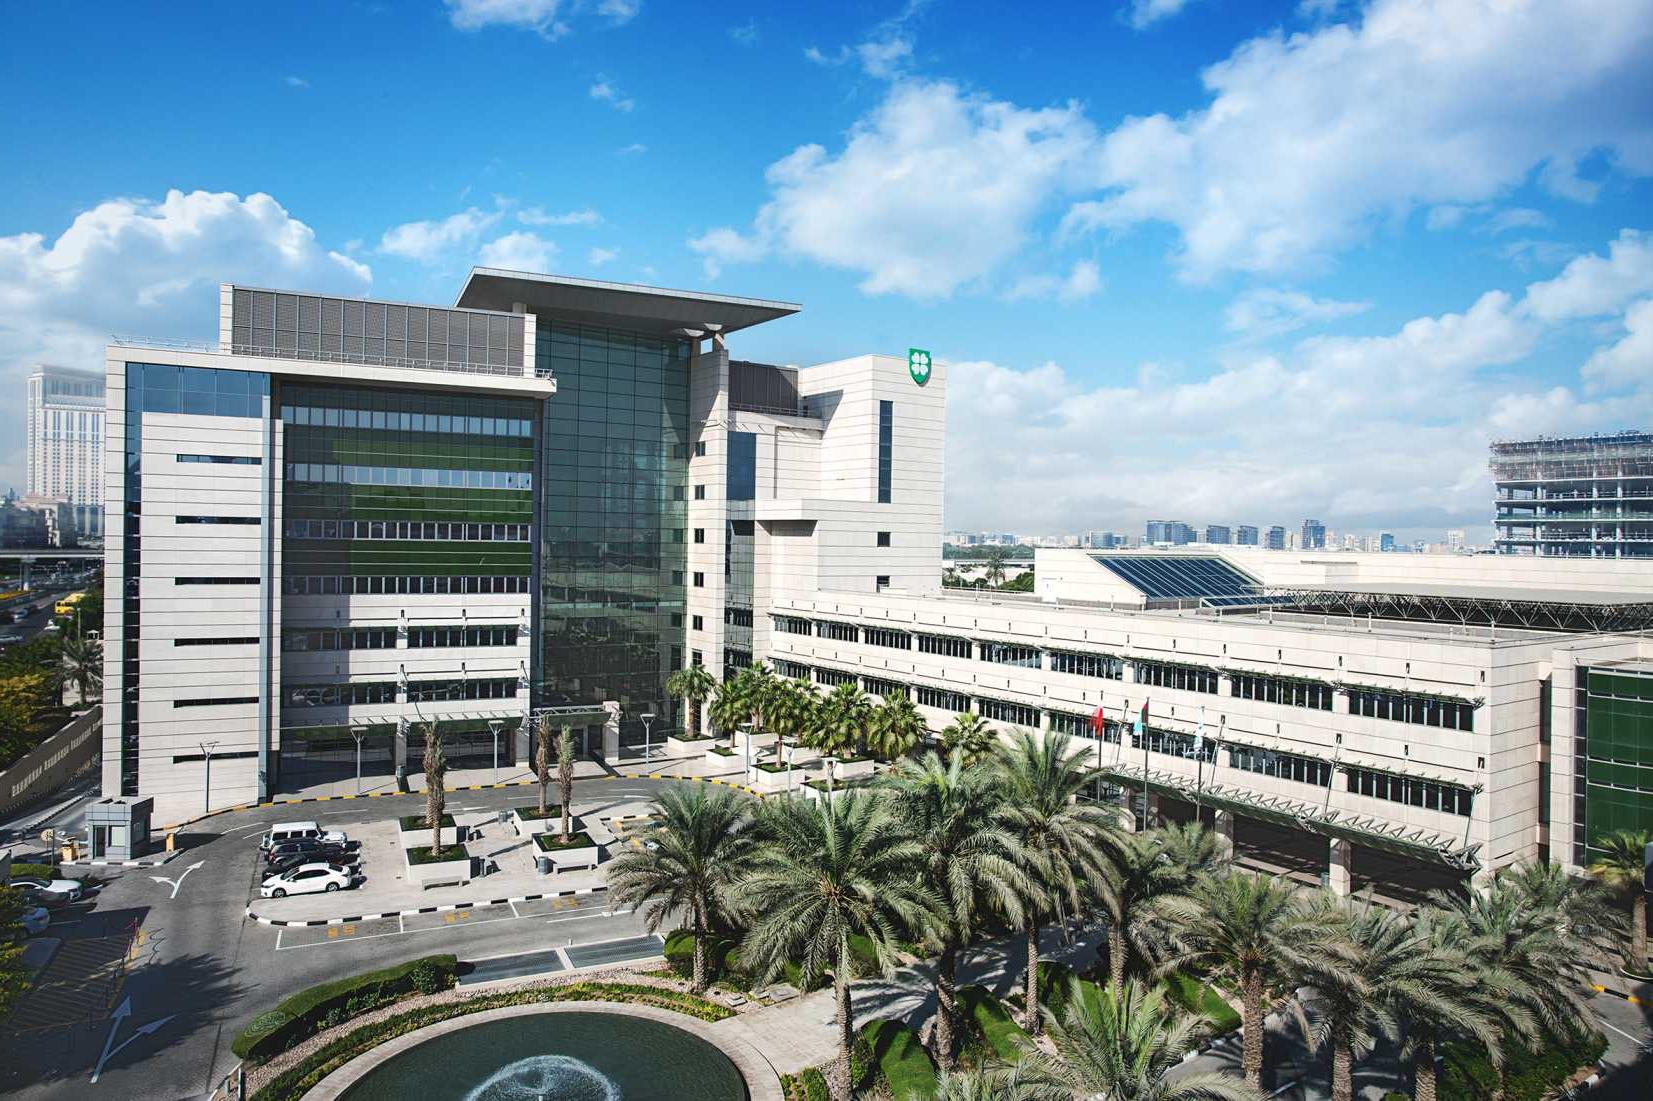 American Hospital Dubai's new Hernia Center set to redefine treatment standards in the region